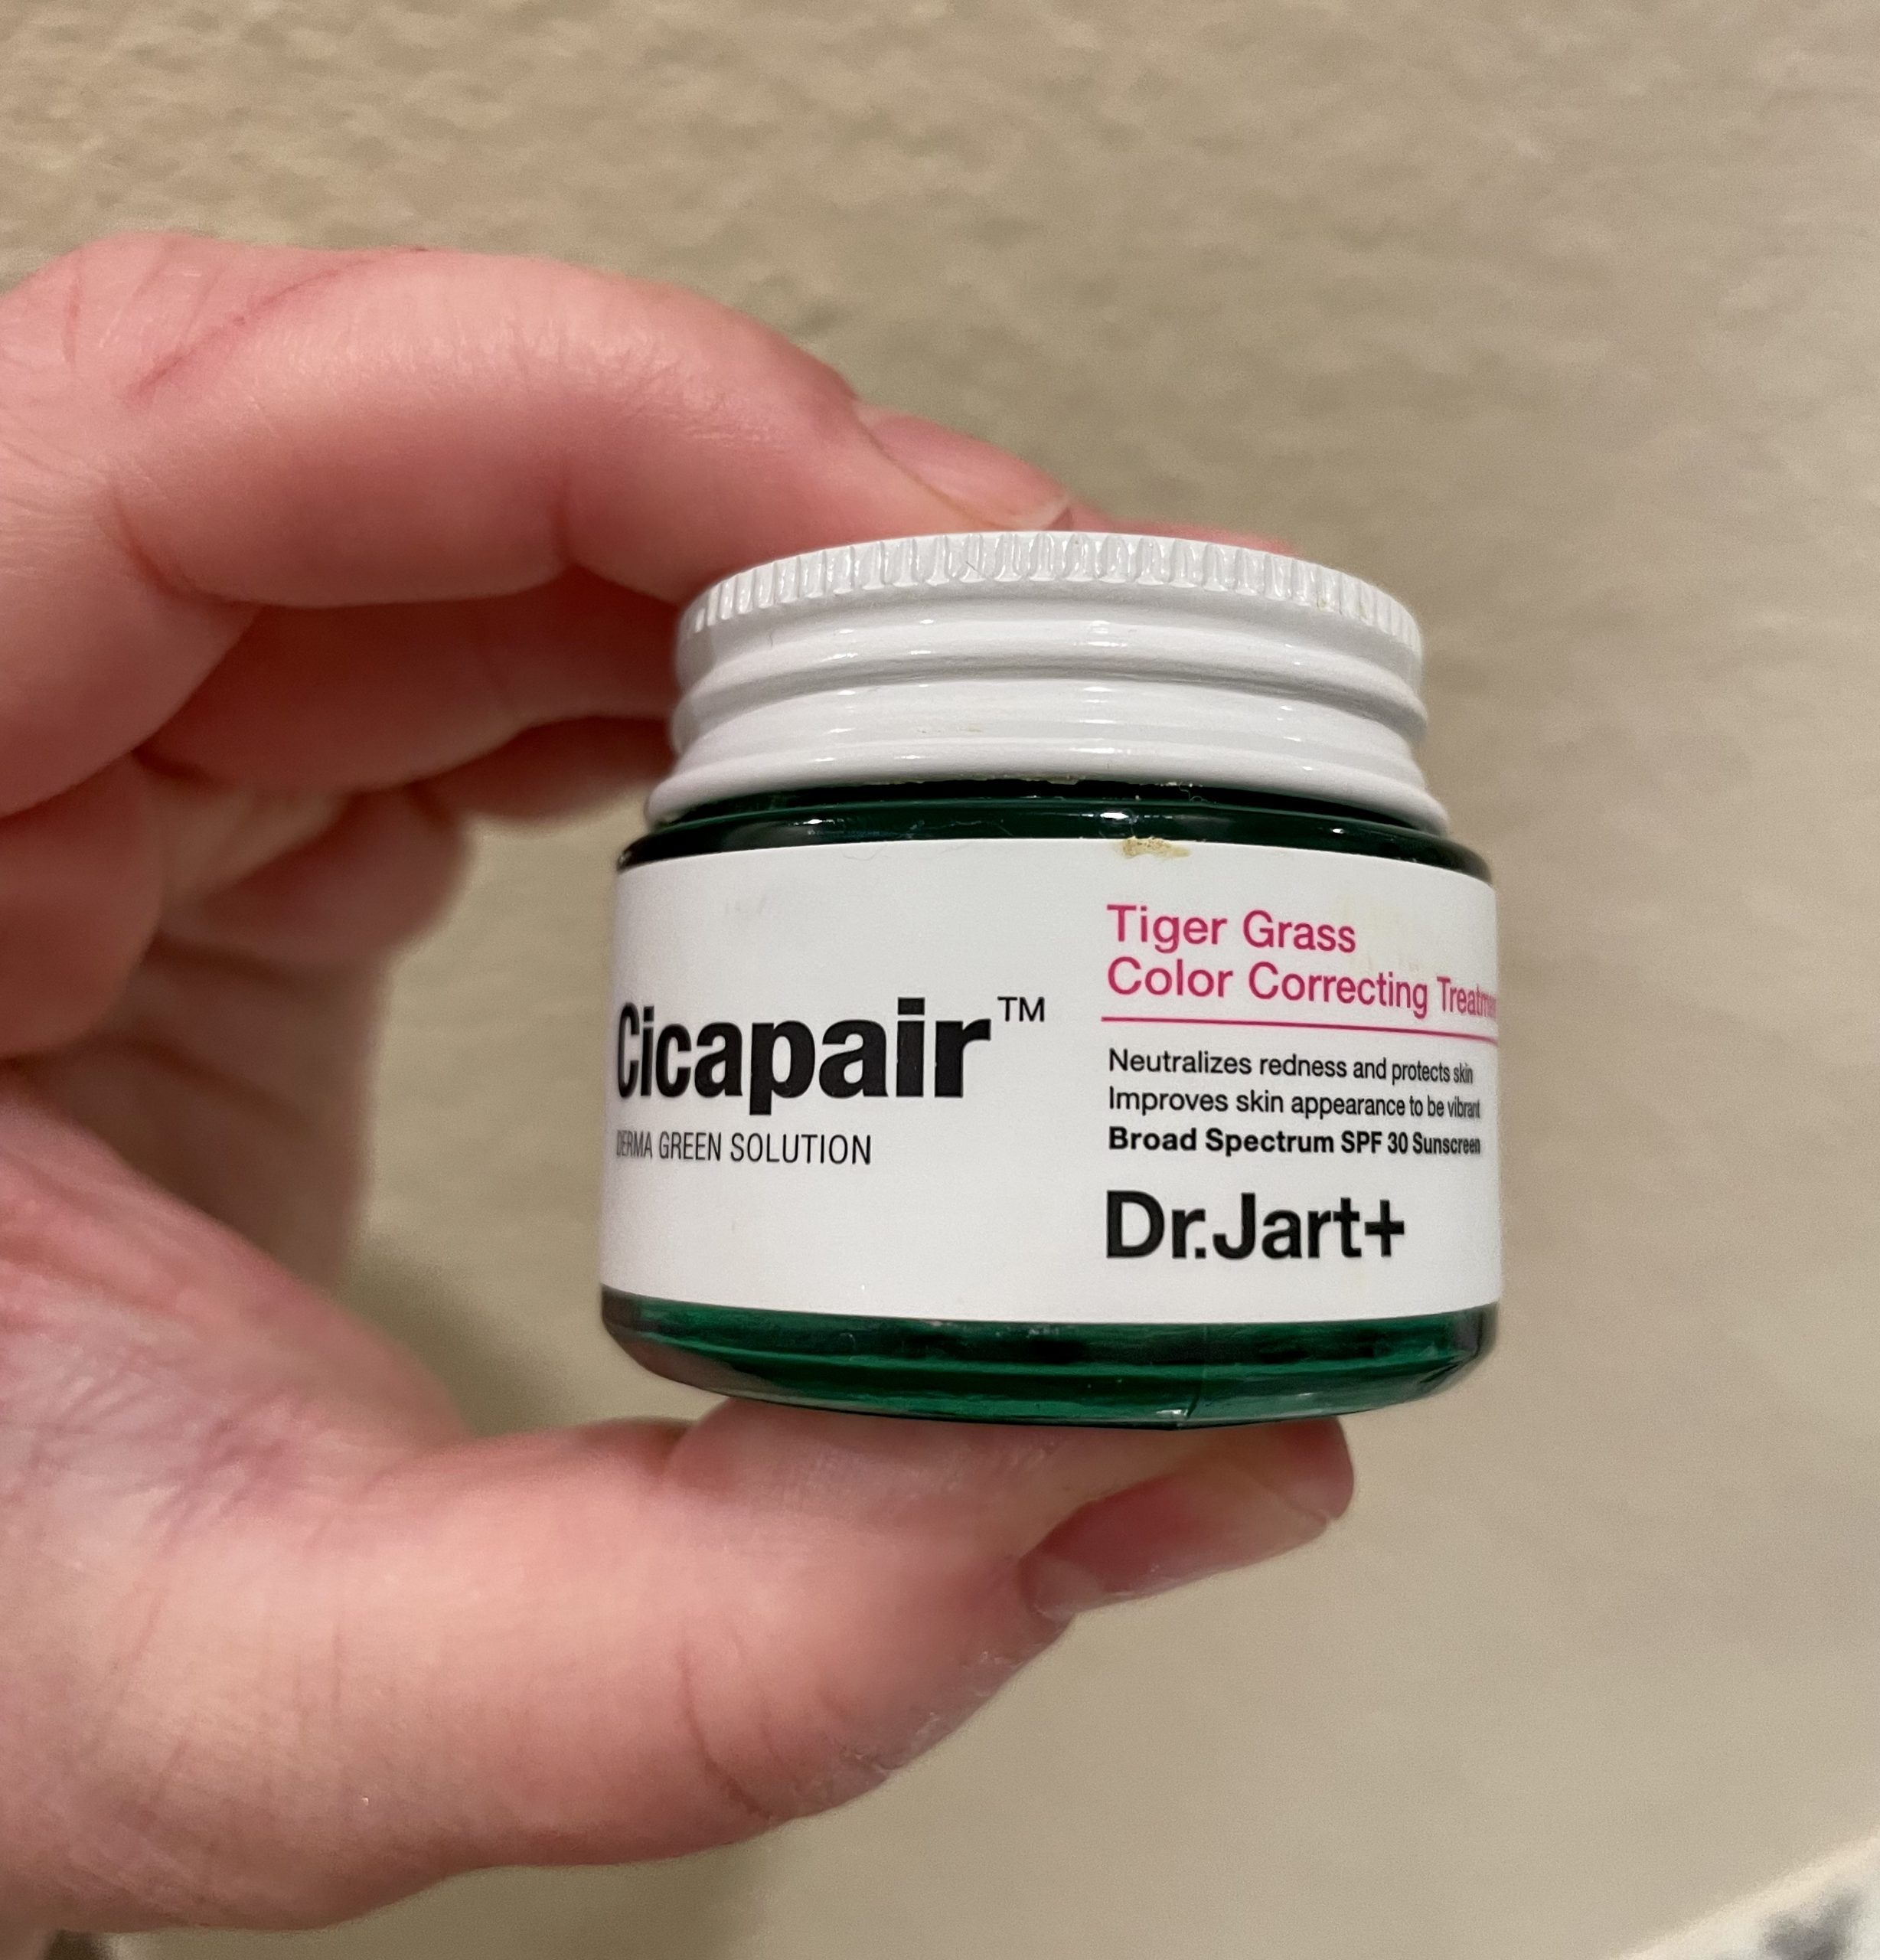 Dr Jart+ Cicapair Tiger Grass Color Correcting Treatment